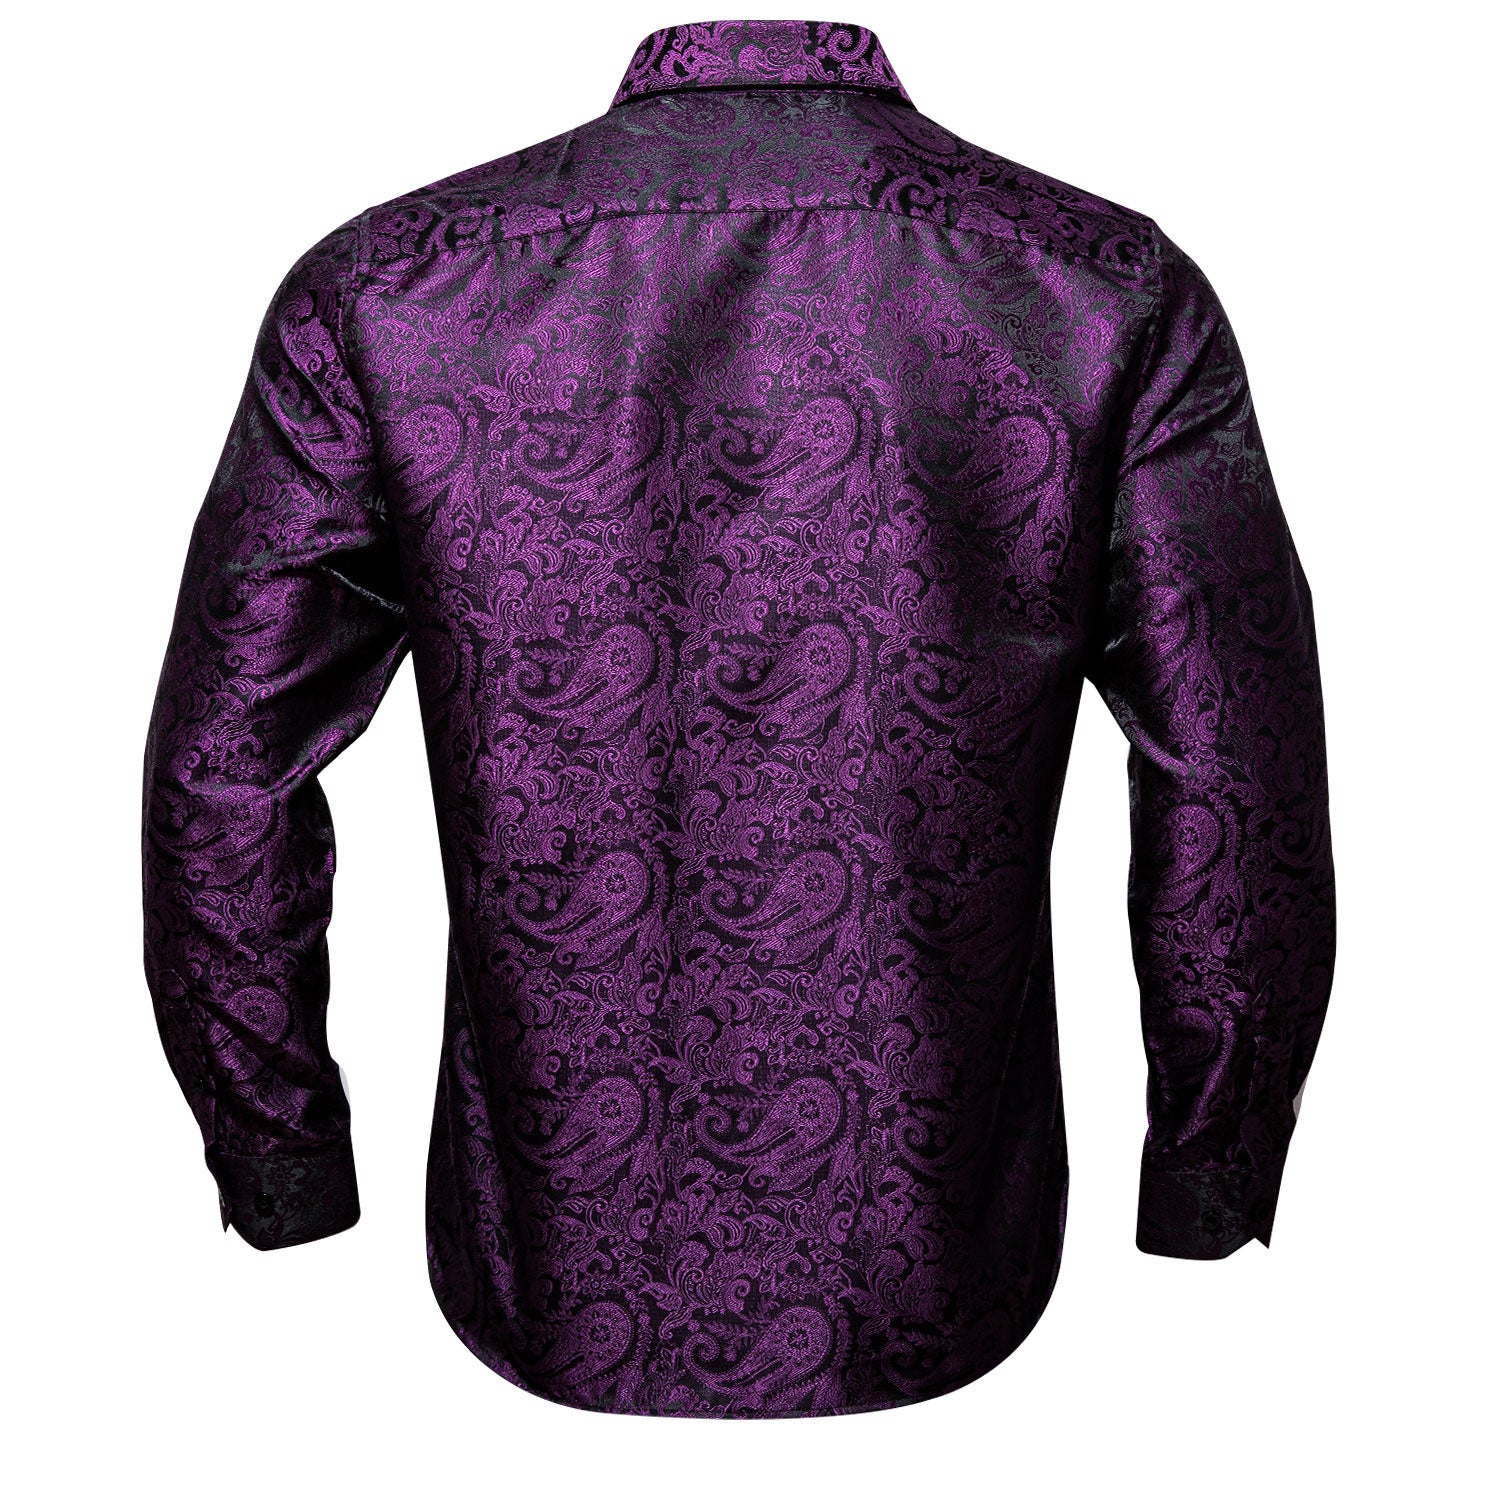 Barry.wang Purple Black Paisley Shirt